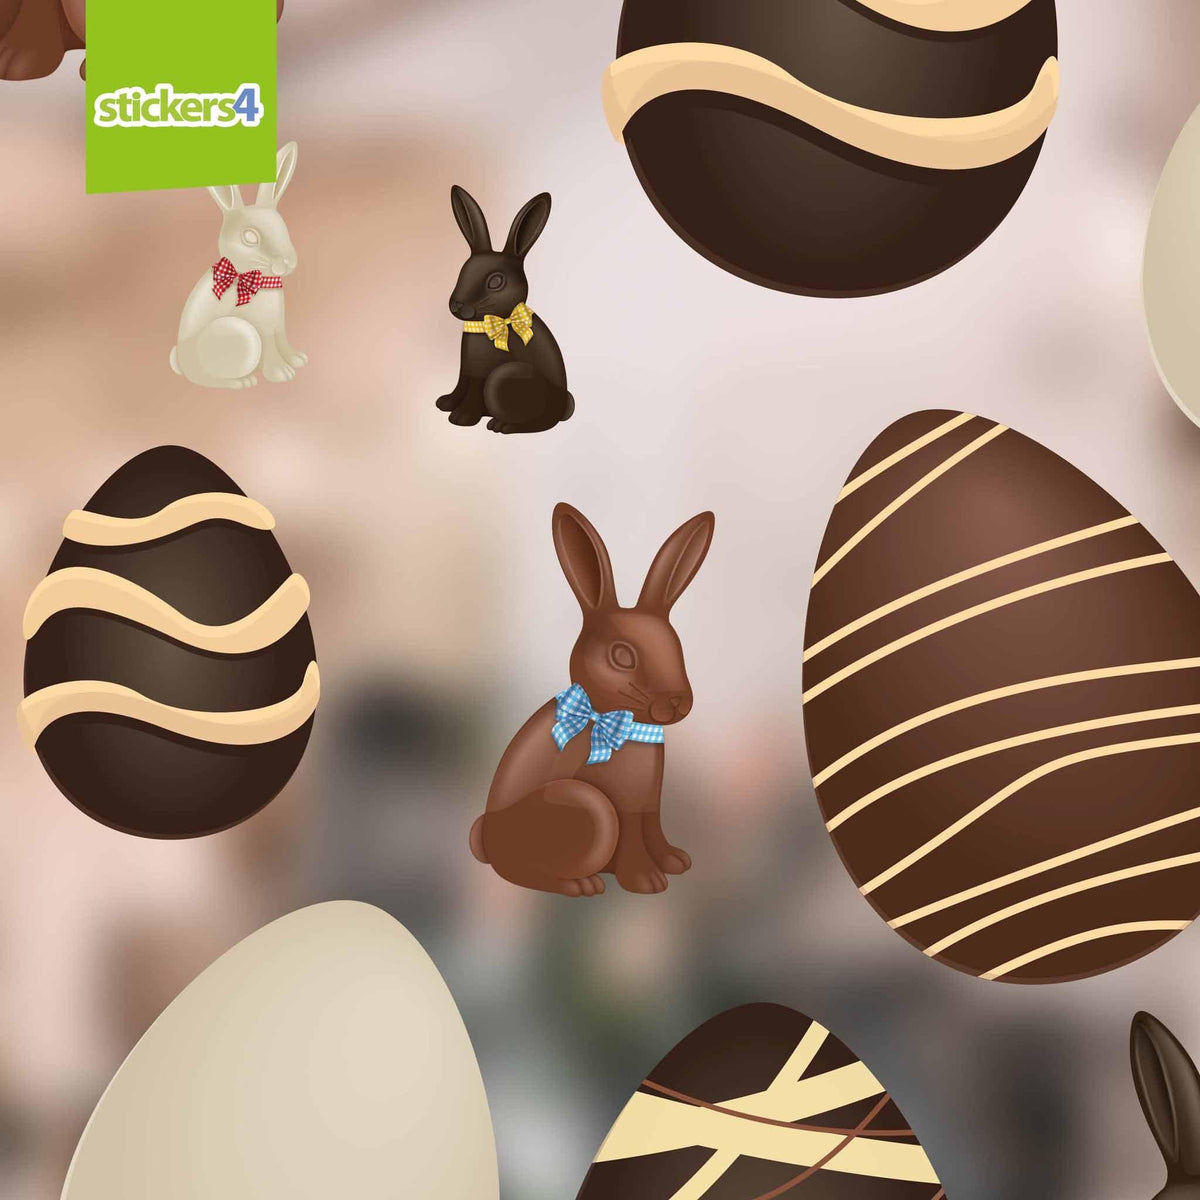 Chocolate Eggs &amp; Bunnies Window Stickers Easter Window Display